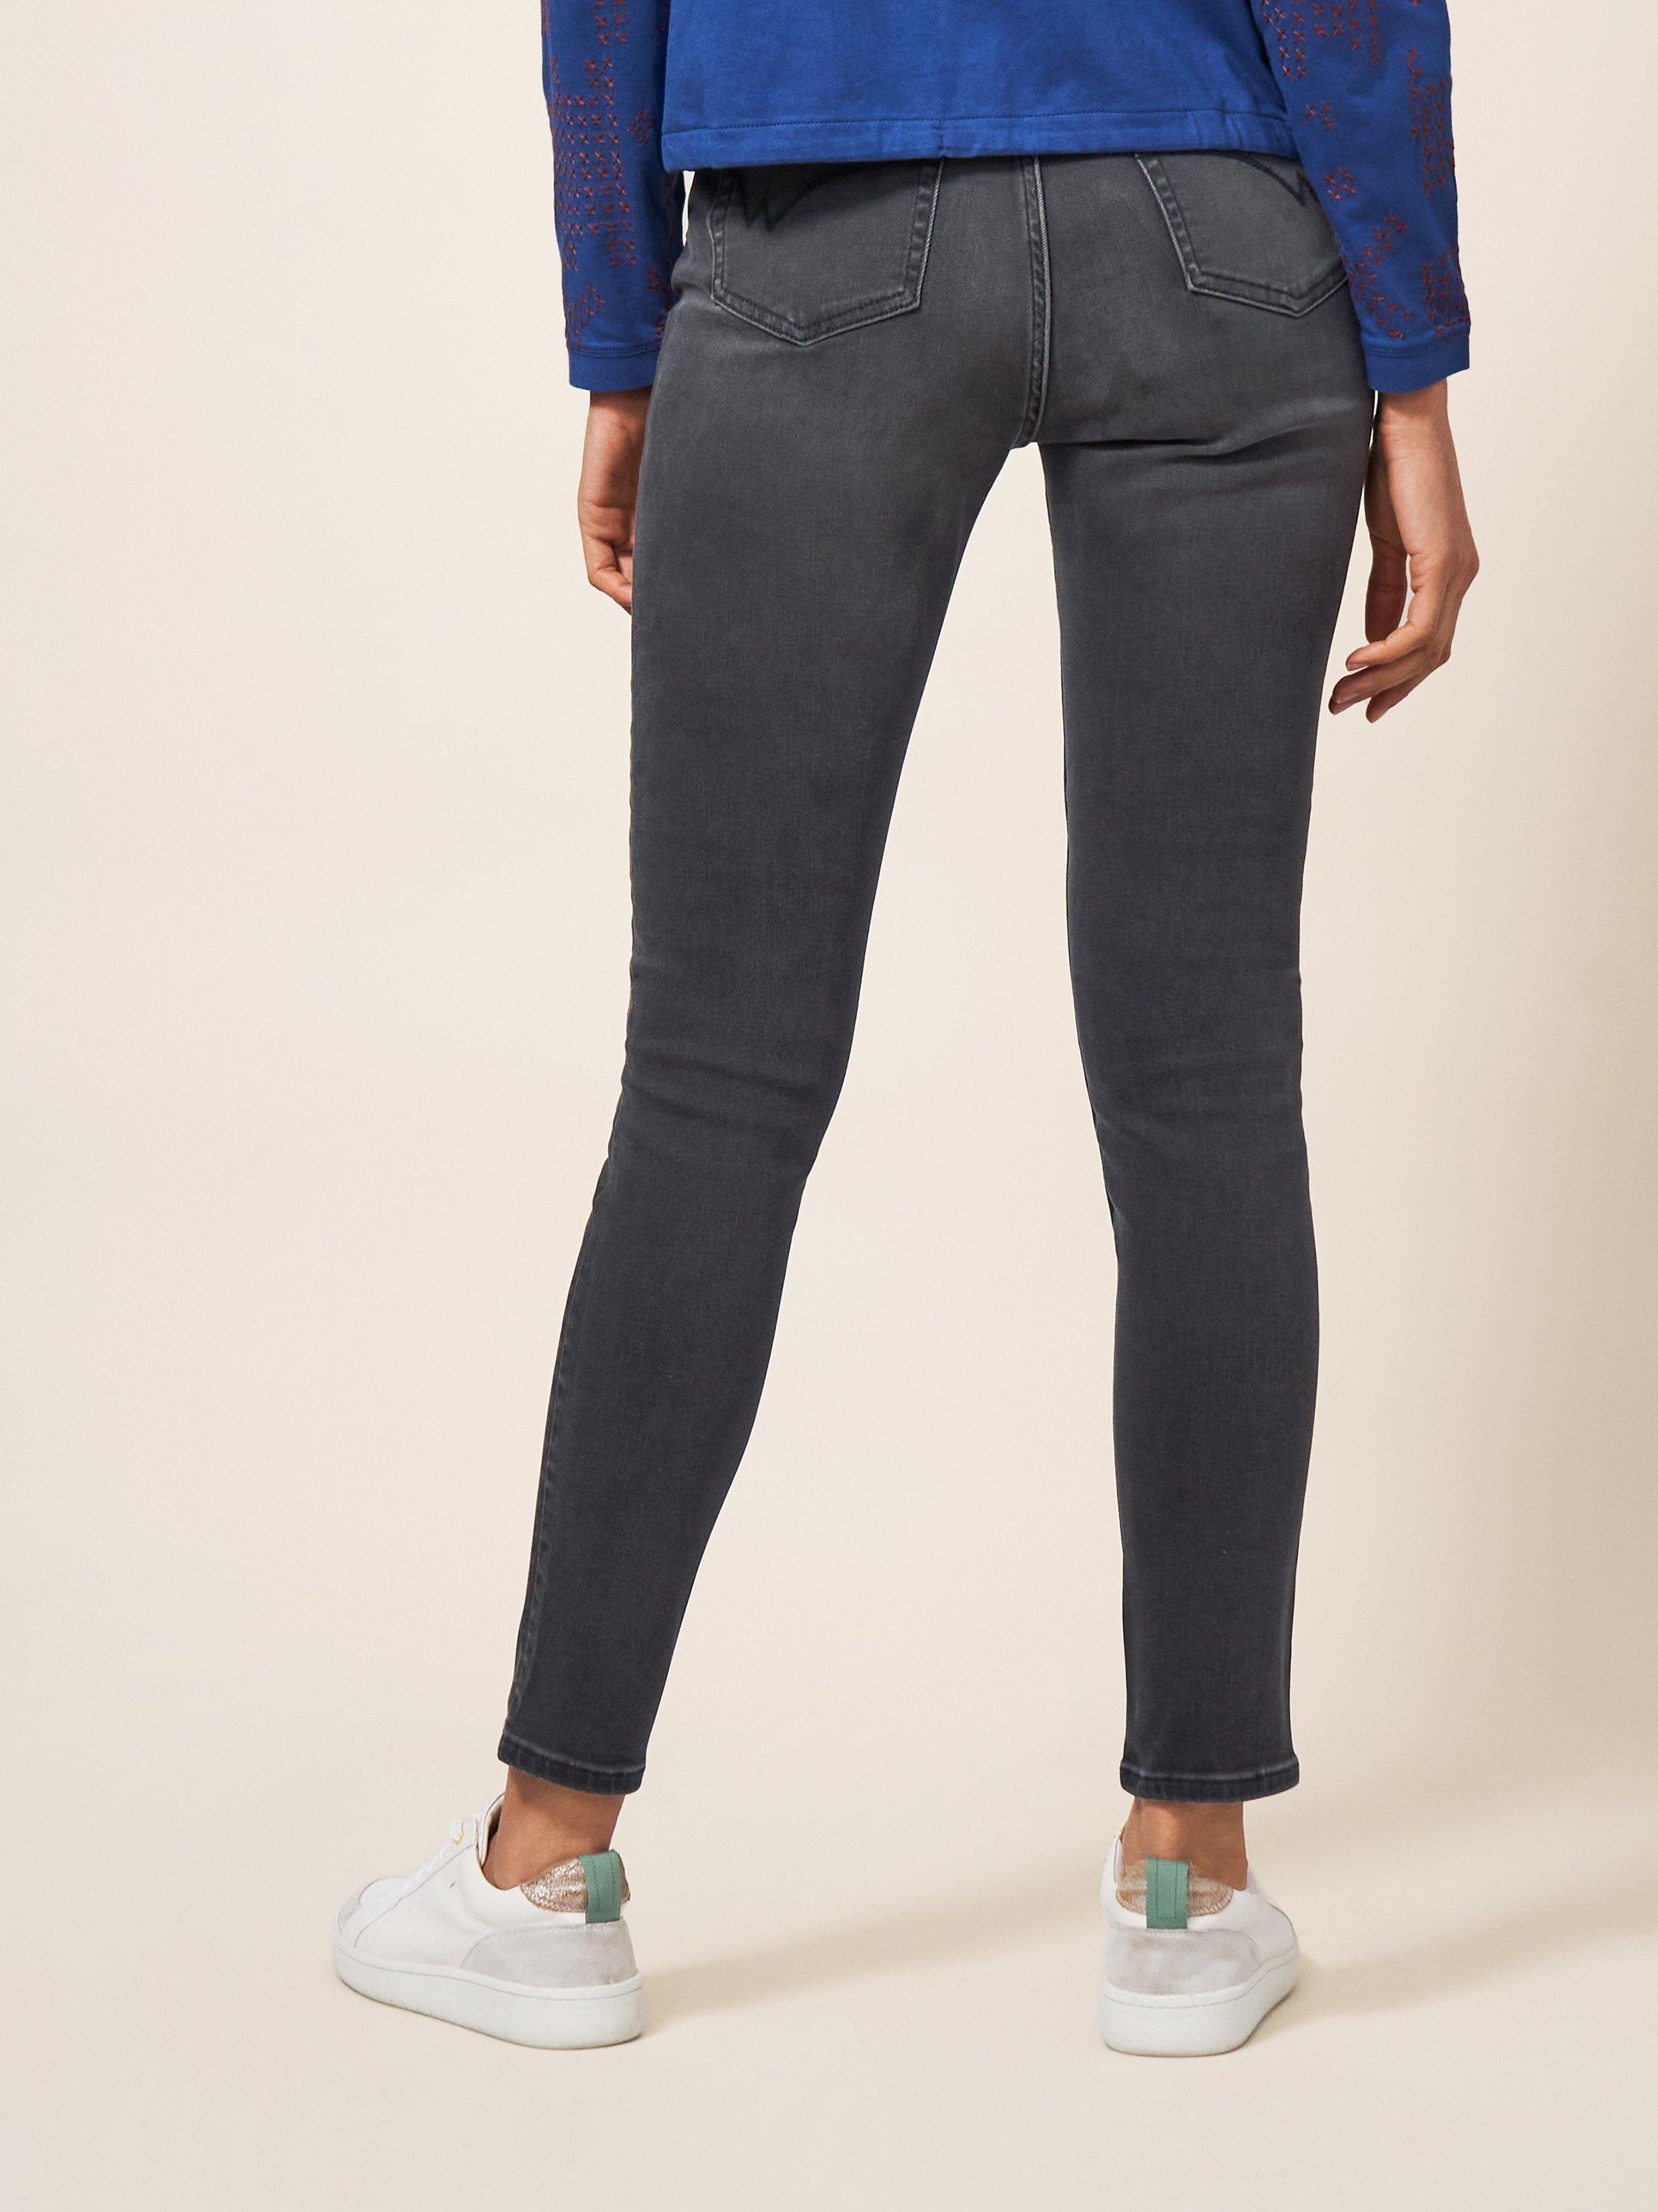 Amelia Skinny Leg Jeans in CHARC GREY - MODEL BACK